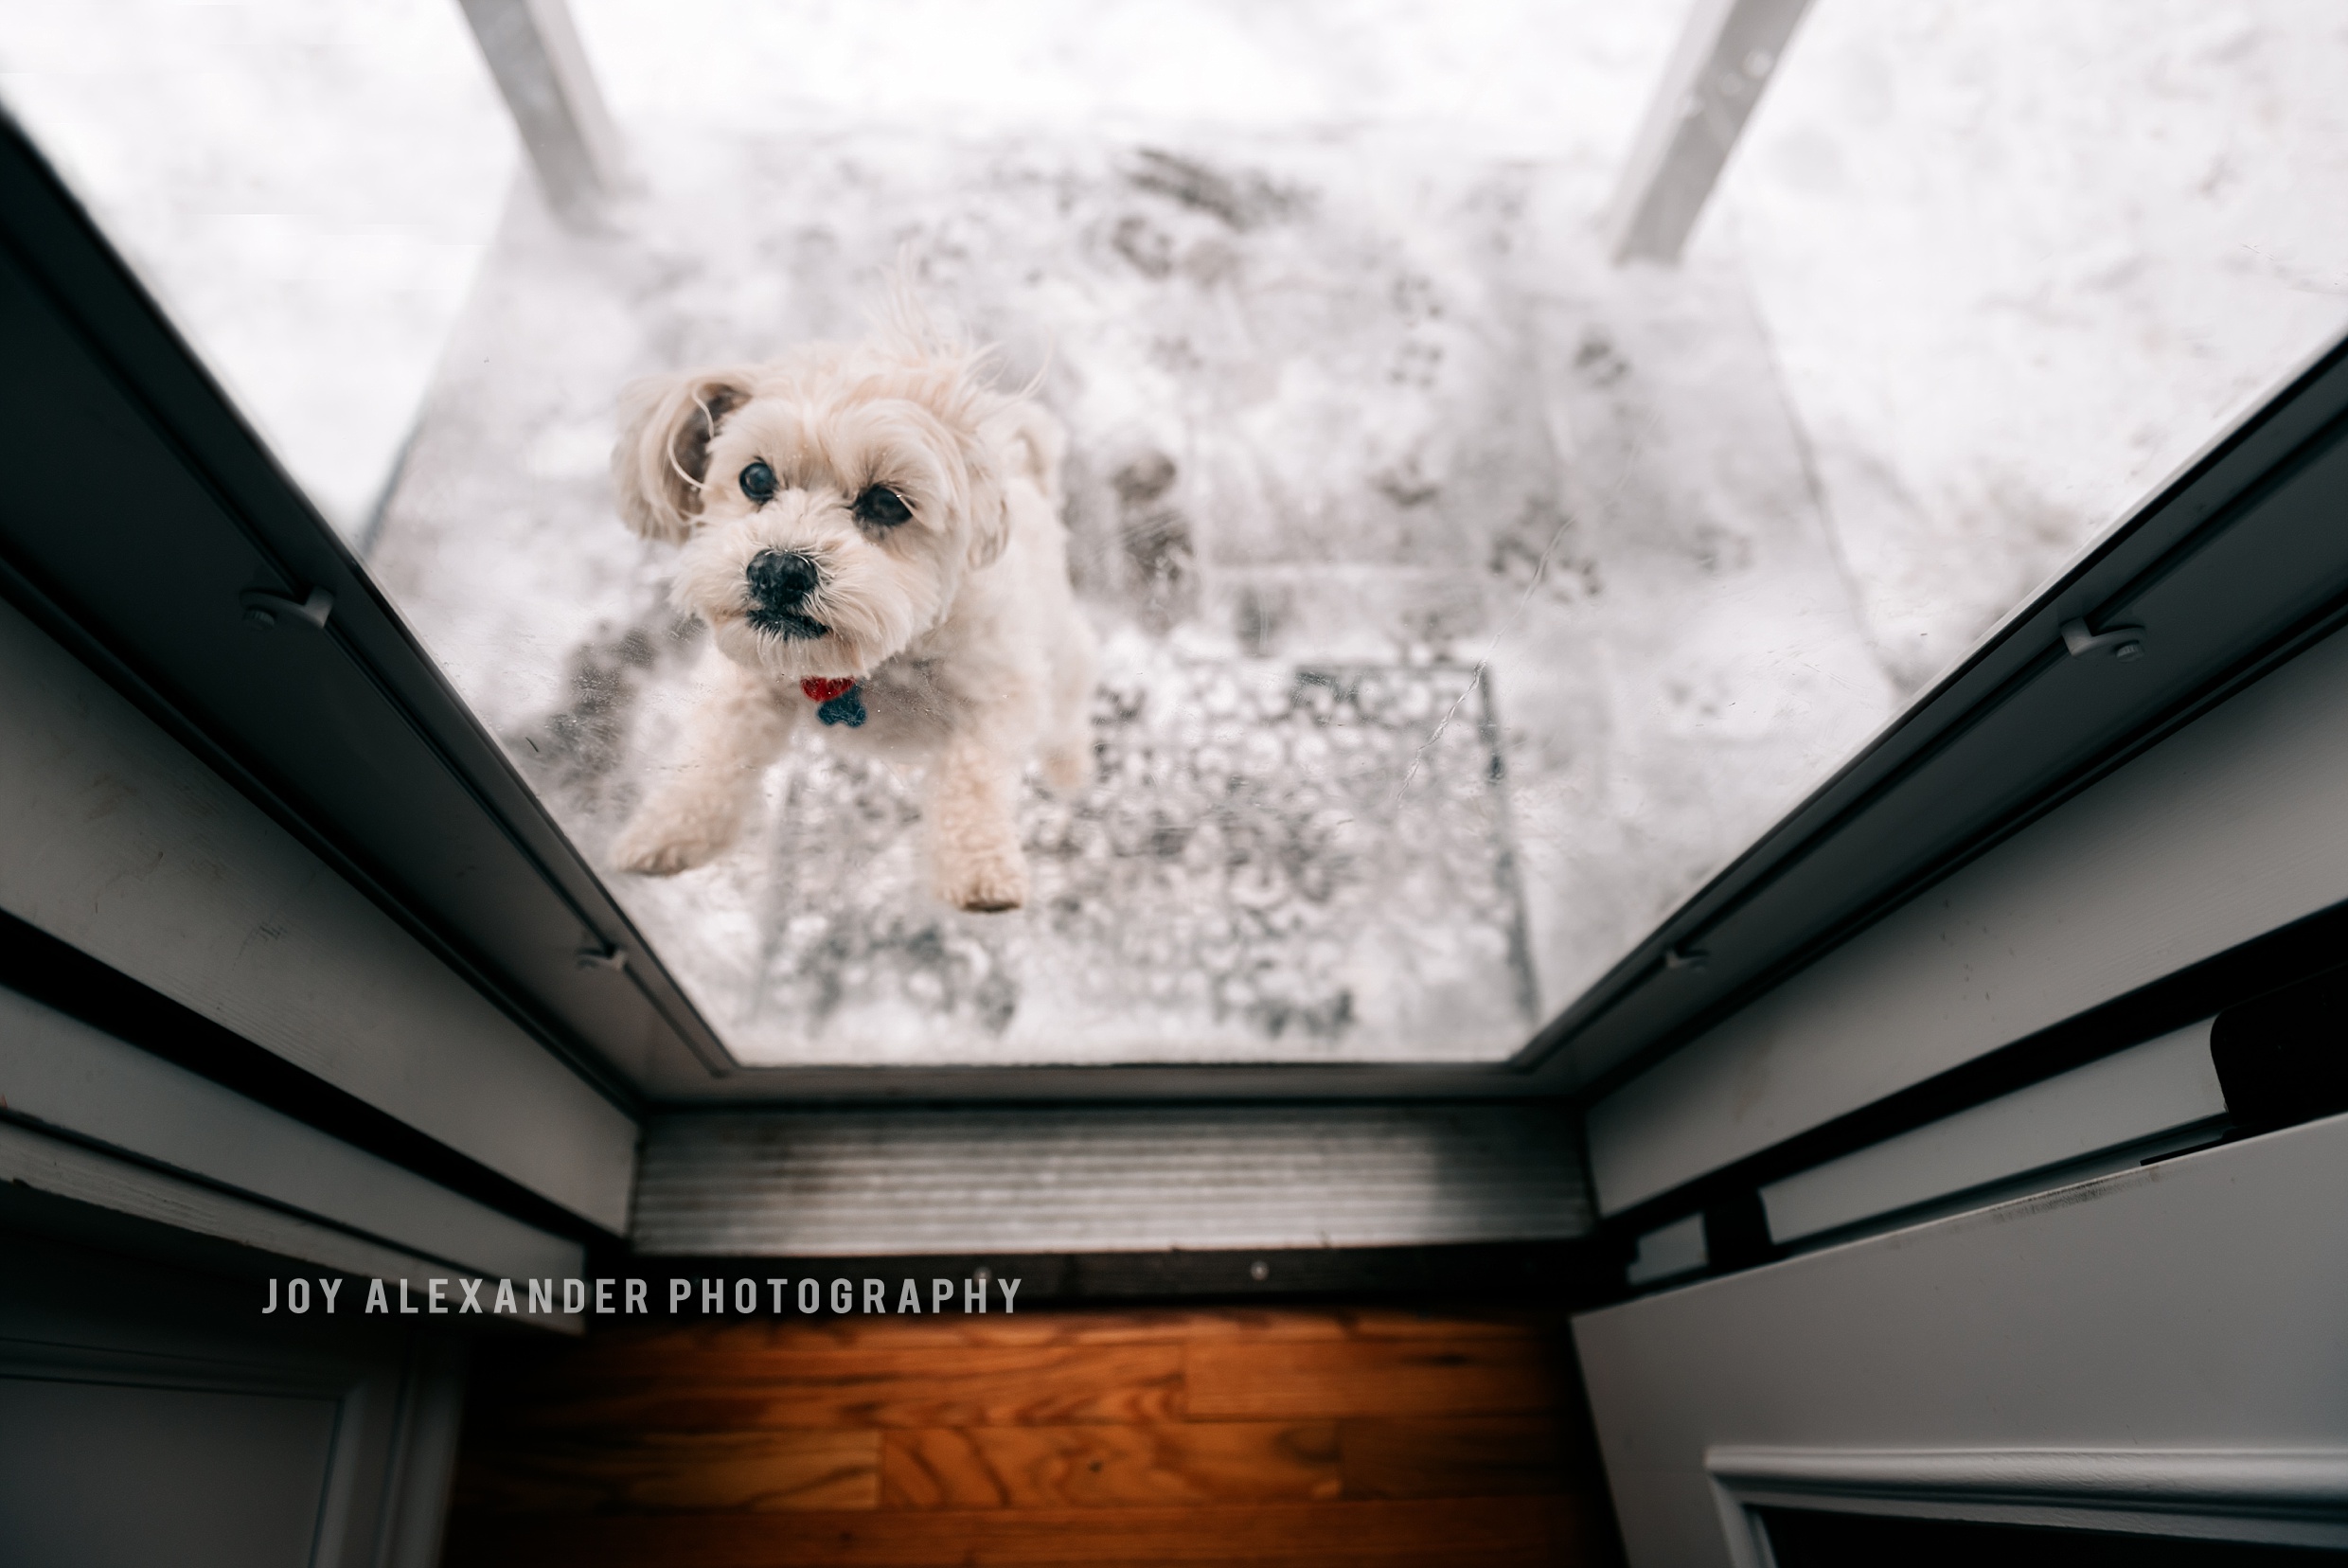 new york lifestyle photographer, candid family photographer, bichon frise, shitzu, snow day, family dog, dog jumping